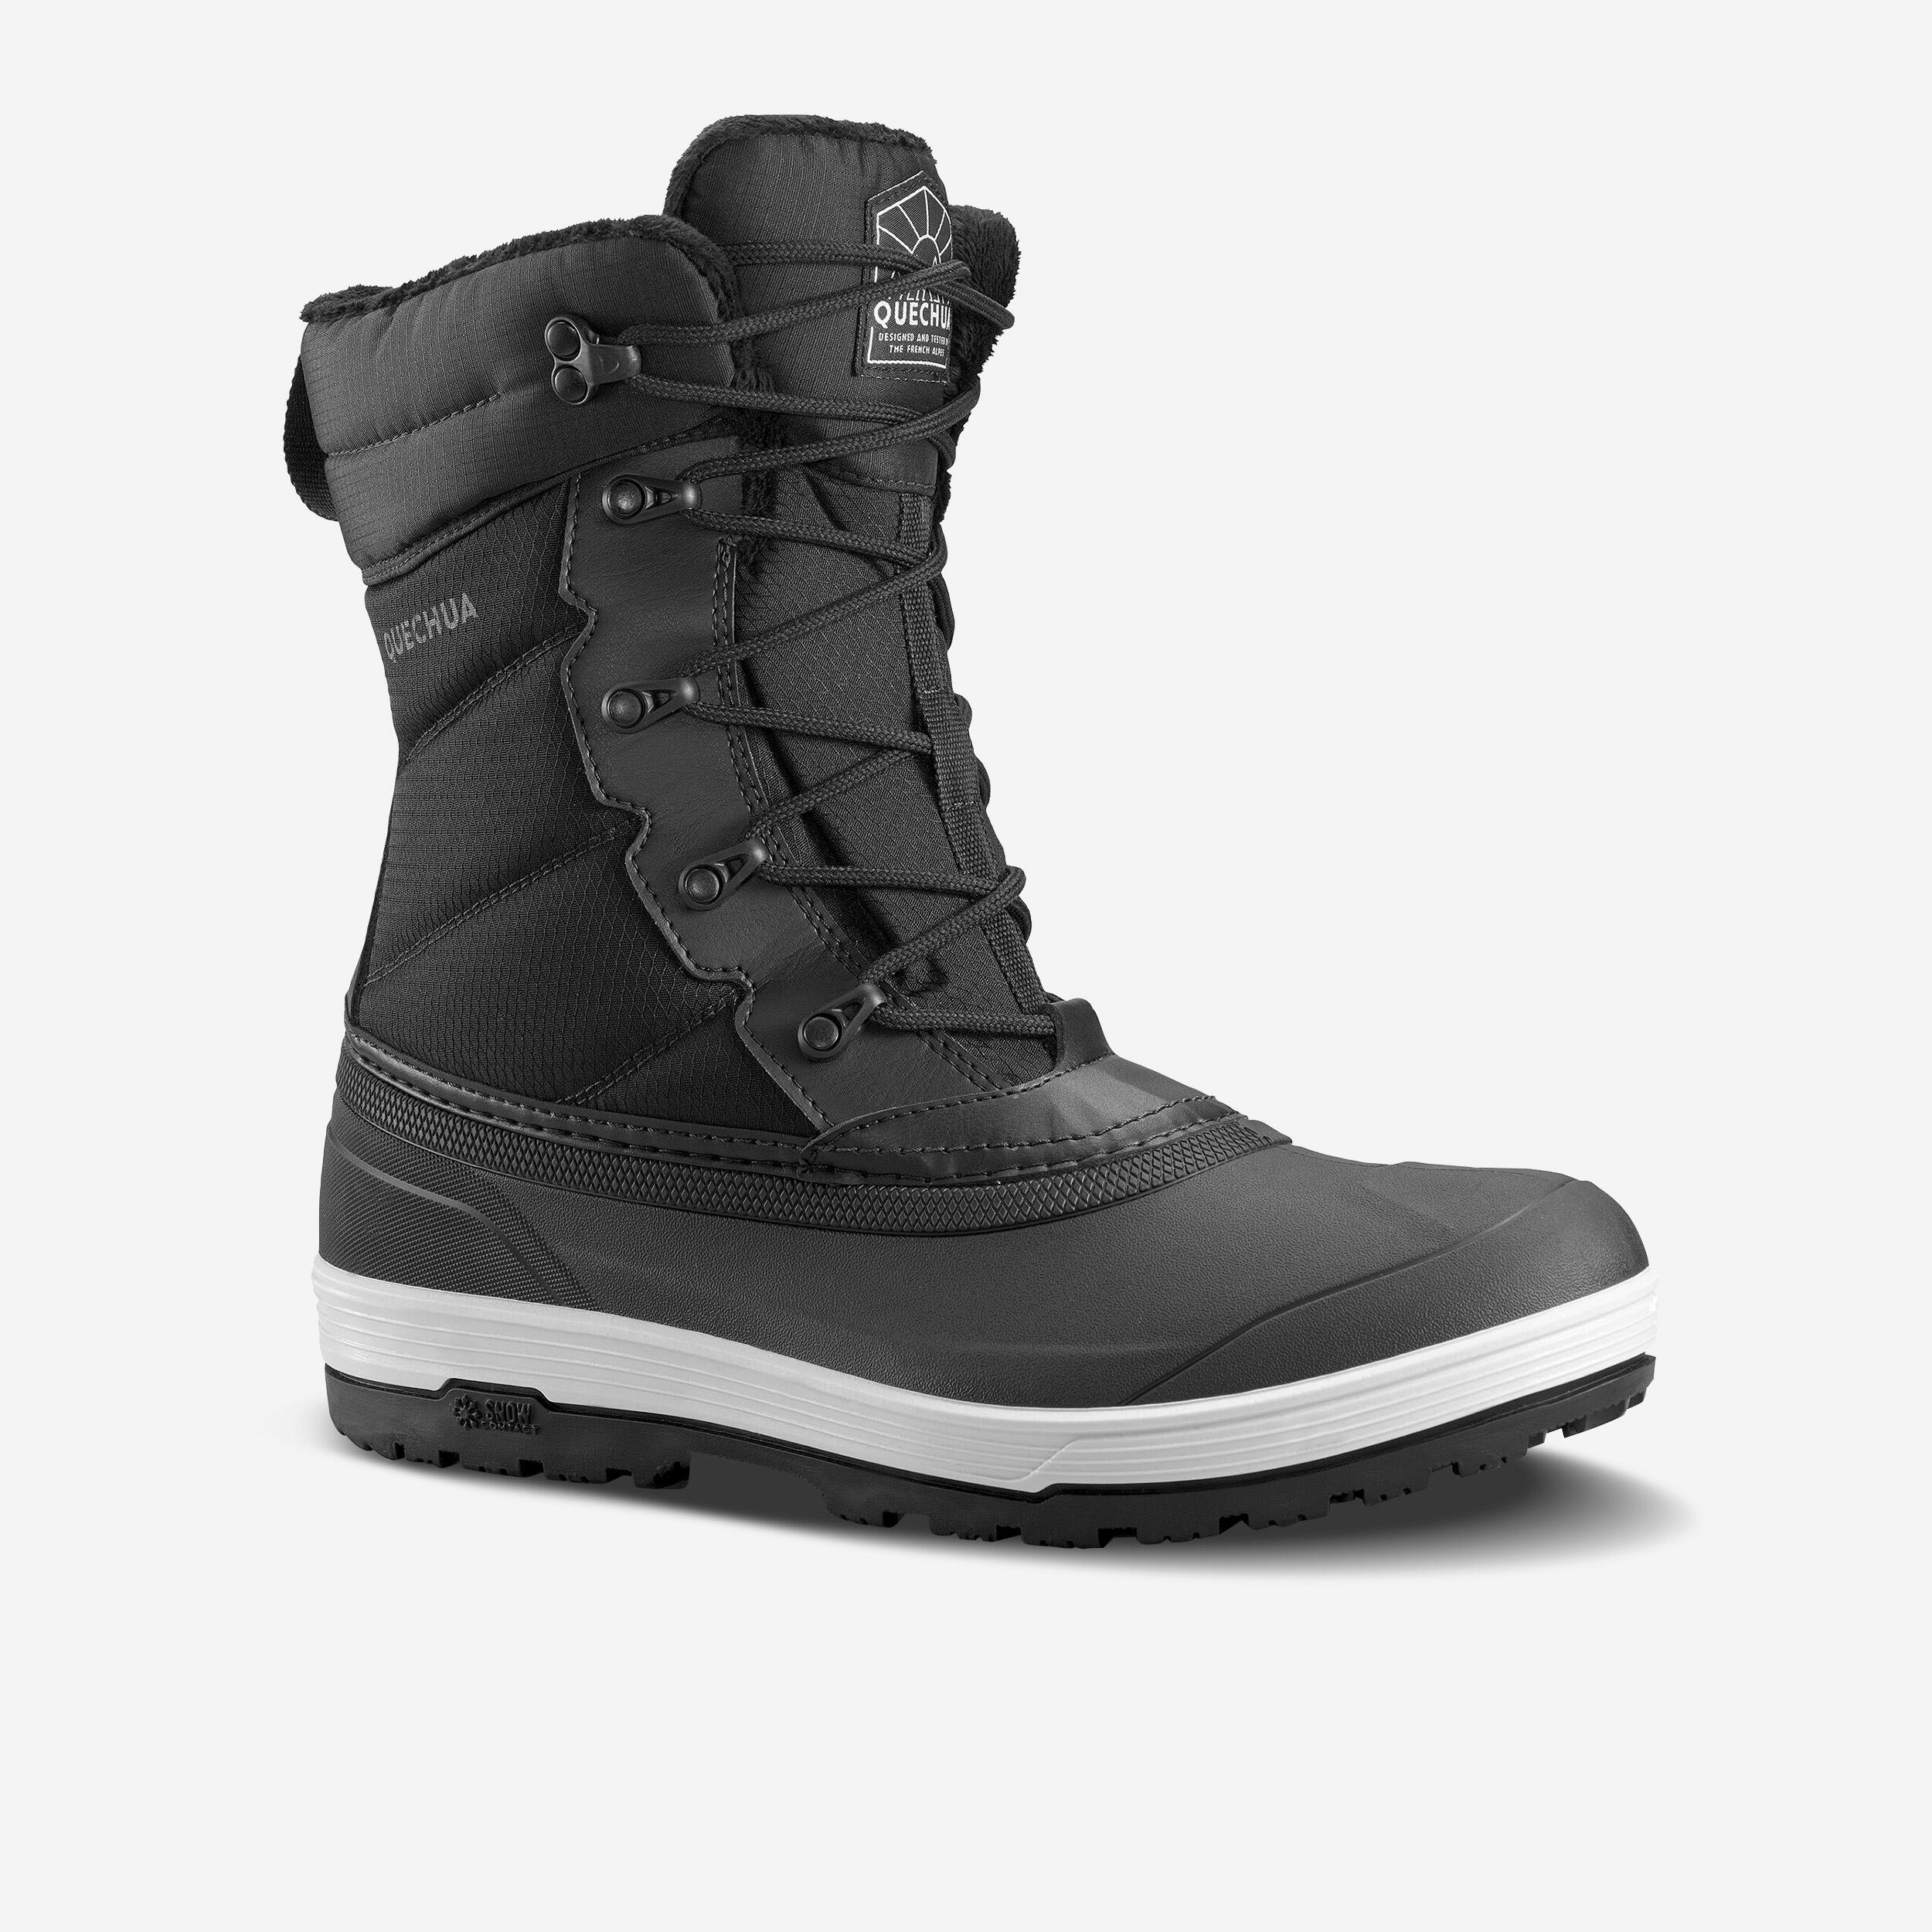 Men's Waterproof Hiking Boots - X-Warm SH 500 Grey - Carbon grey - Quechua  - Decathlon